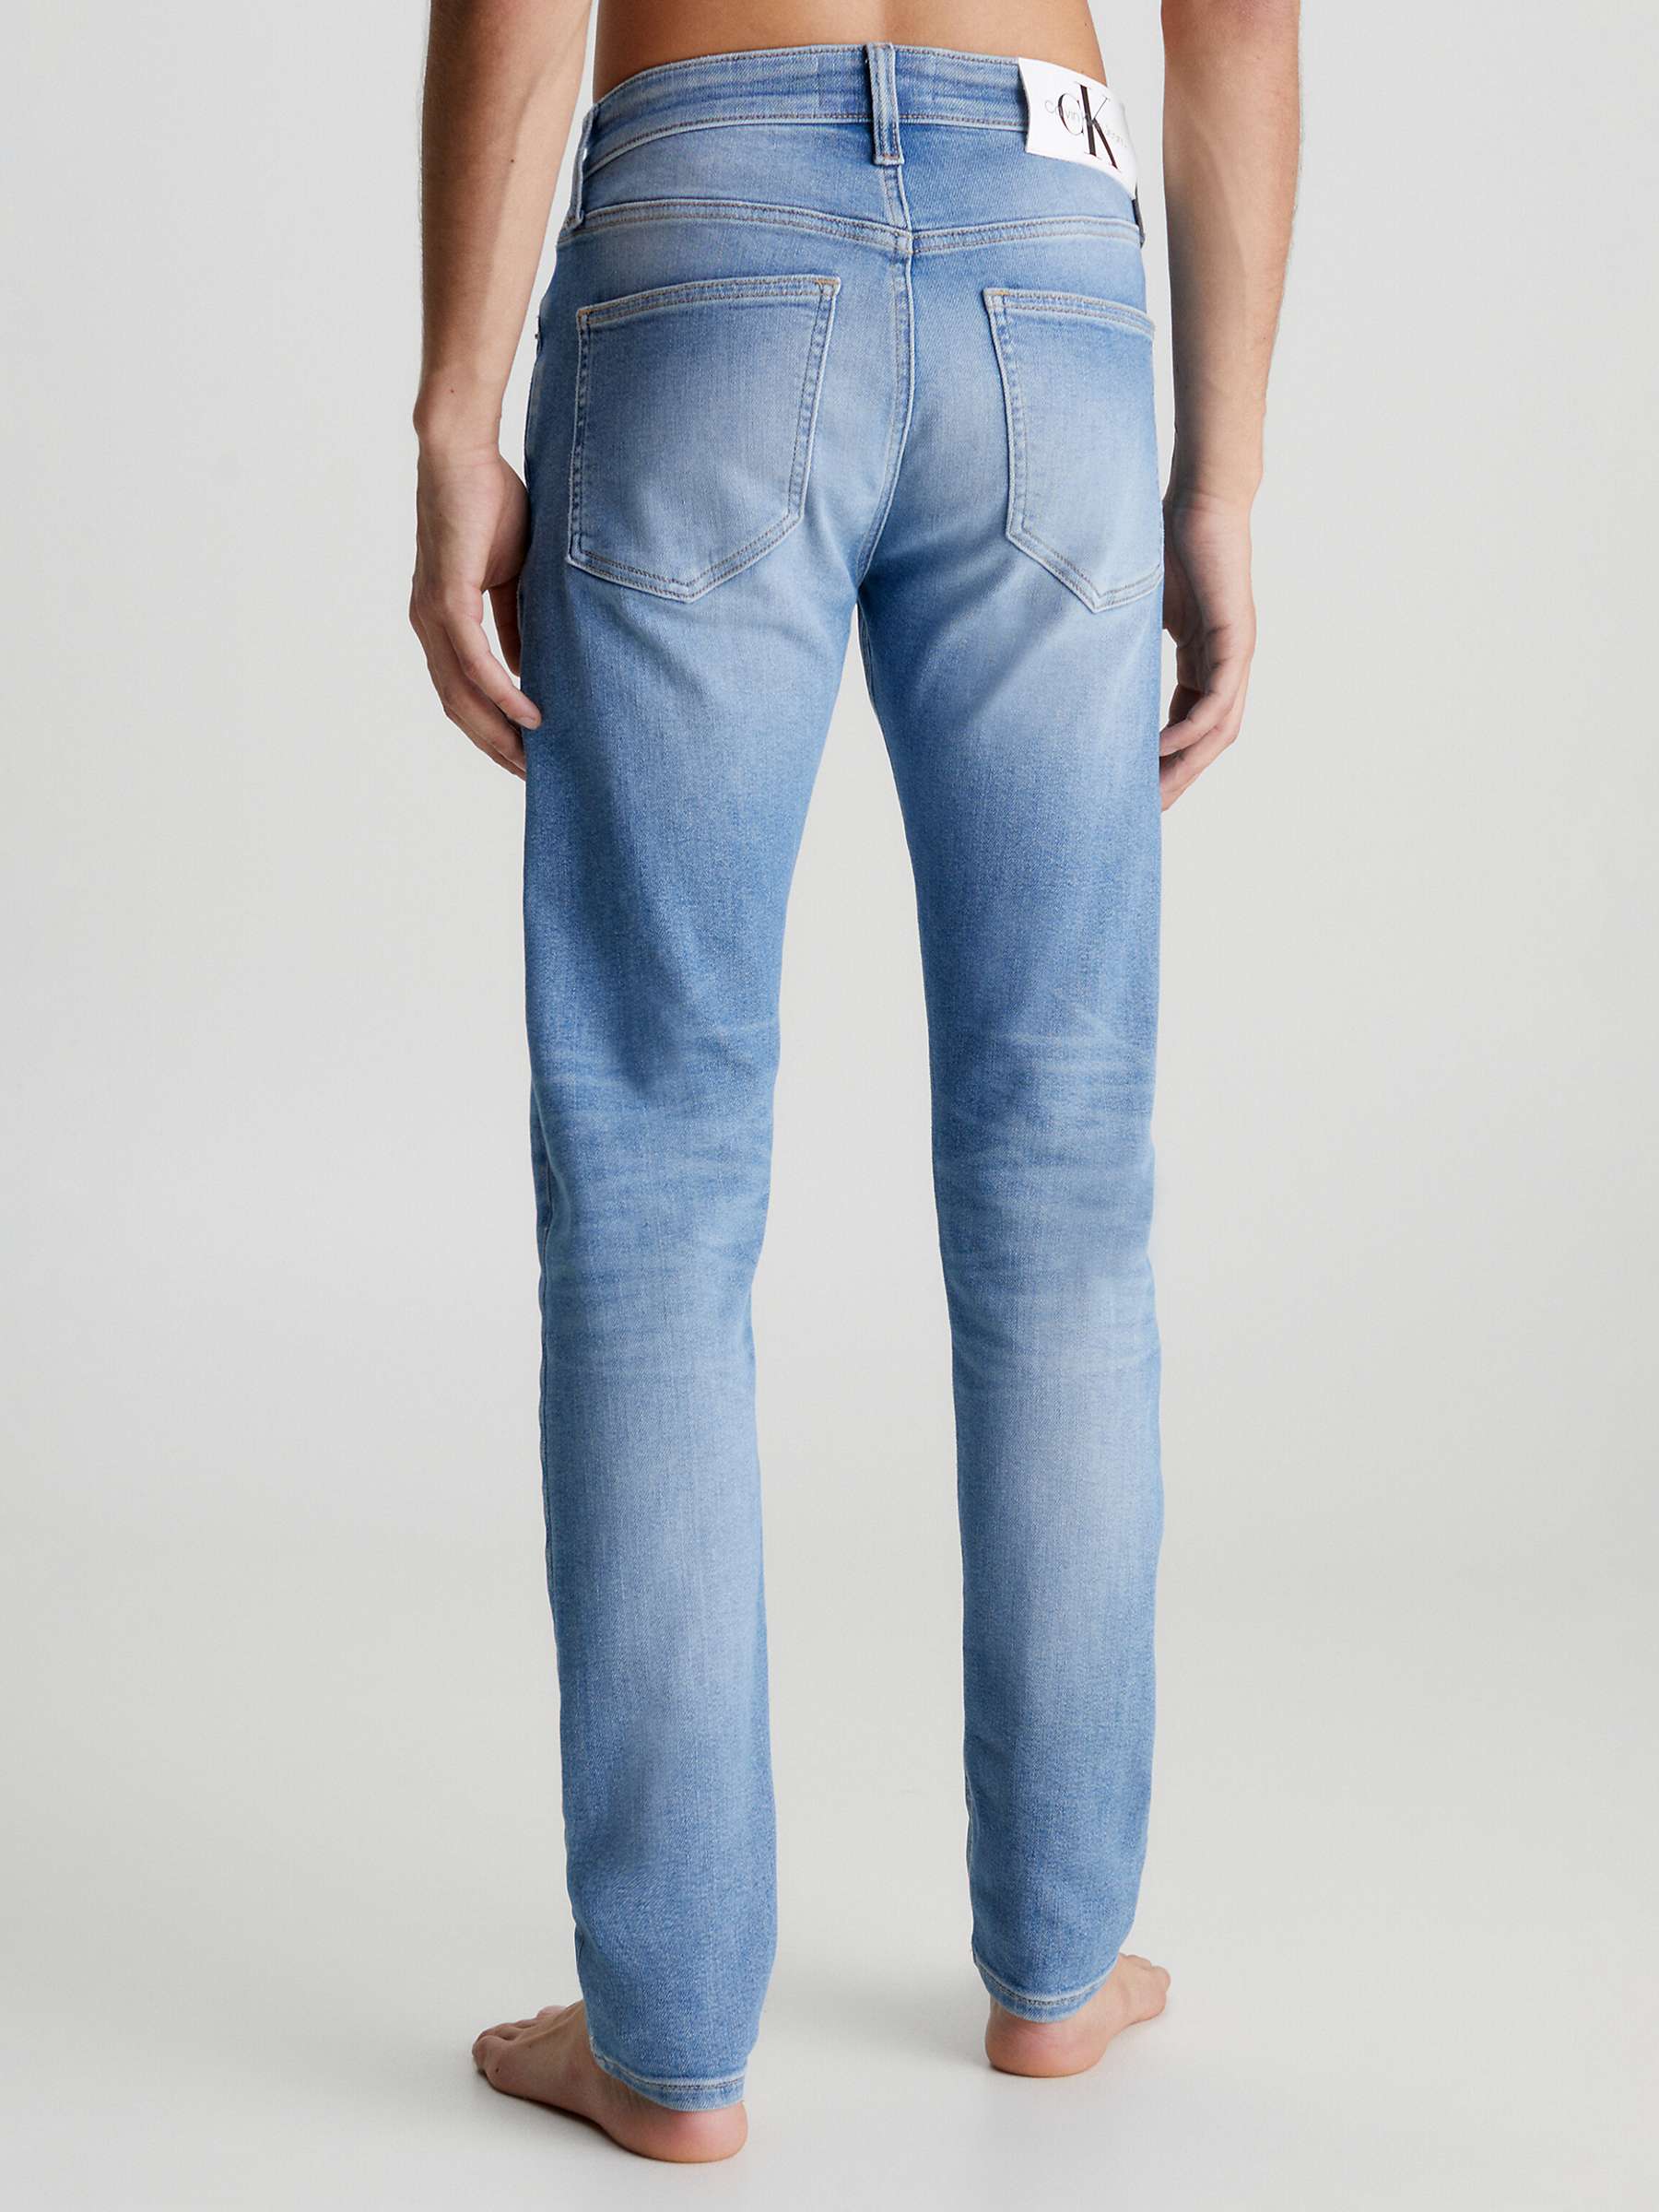 Calvin Klein Jeans Skinny Fit Jeans, Denim Medium at John Lewis & Partners